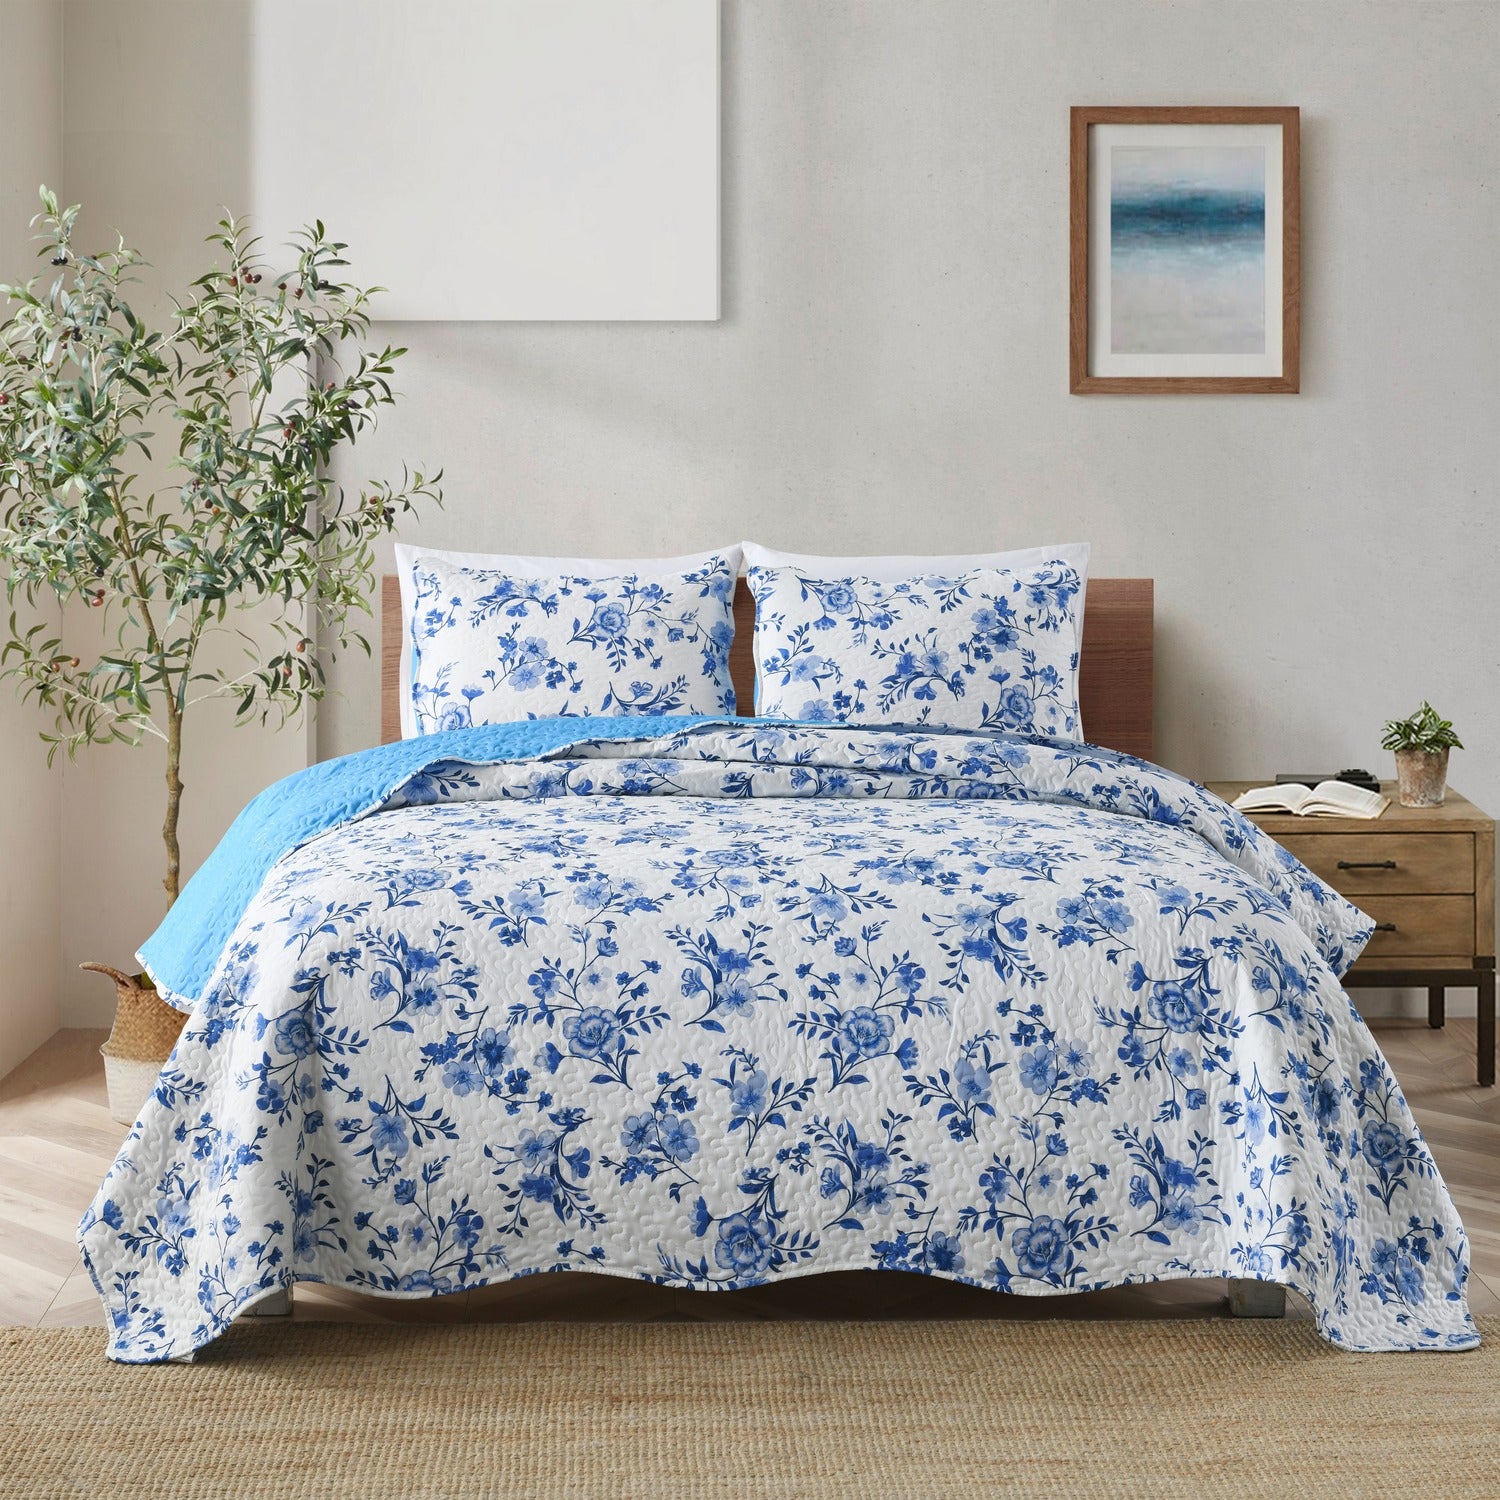 Floral Blue 3pc Bedspread Quilt Set. Stitch Quilted Coverlet Set